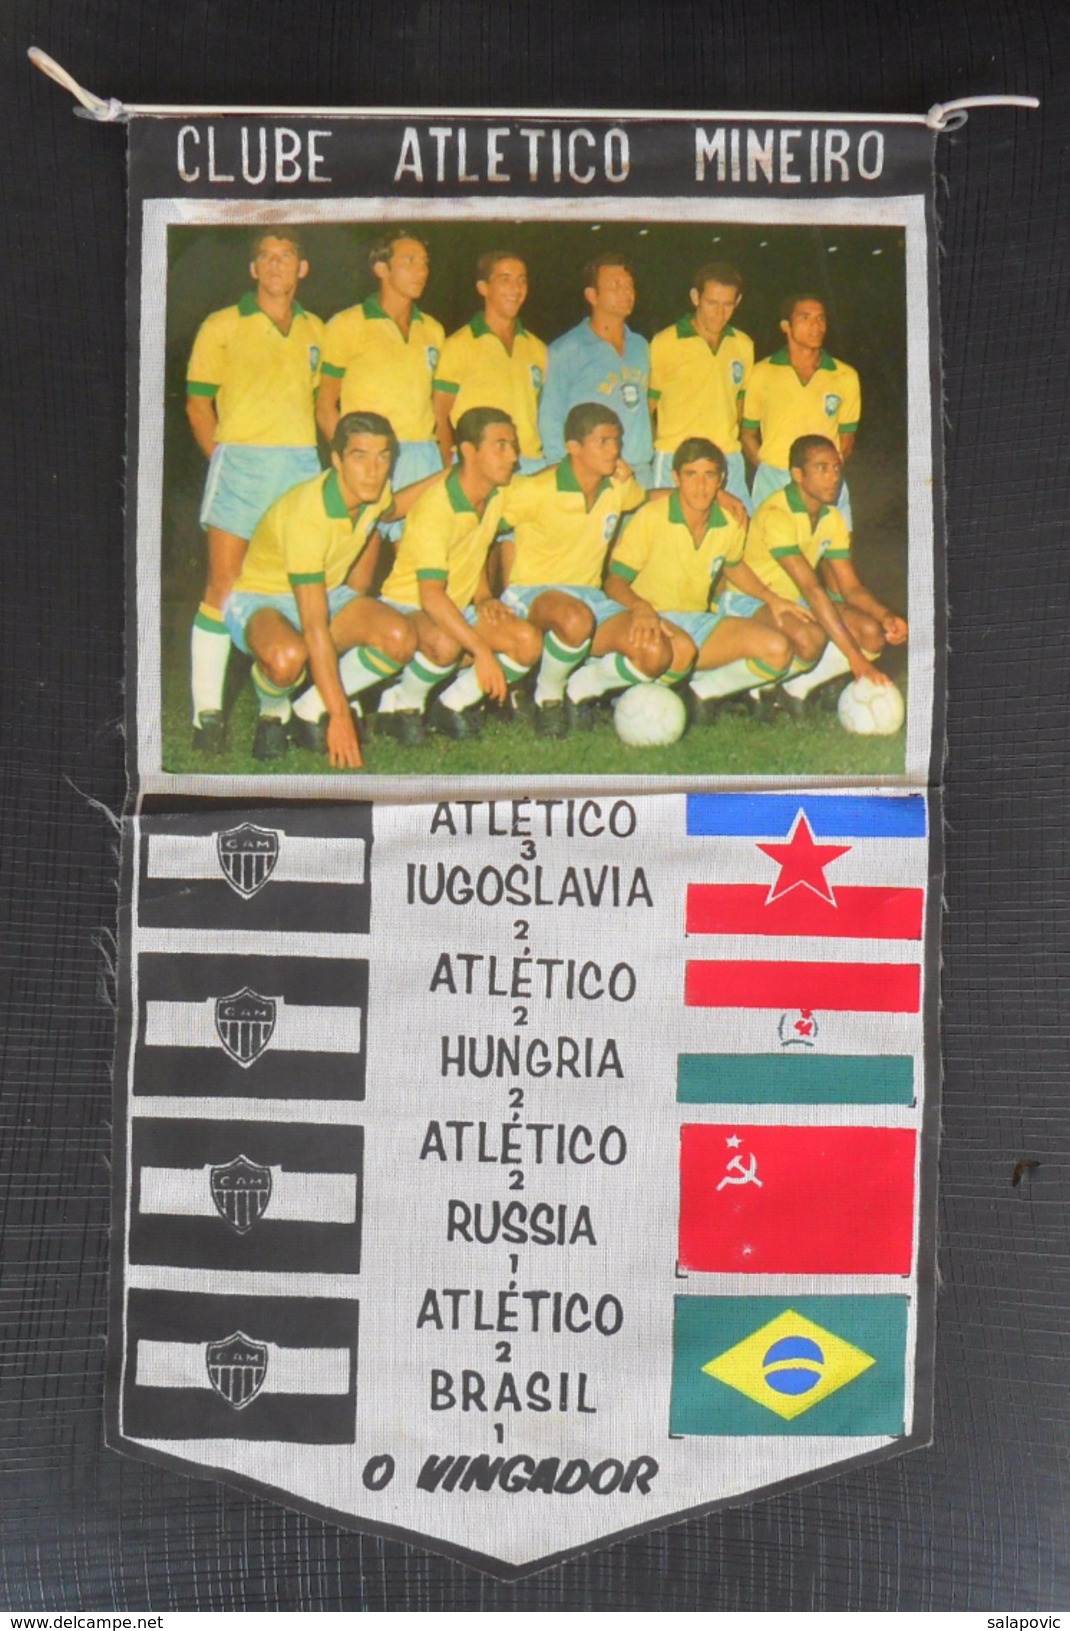 Clube Atlético Mineiro Brasil Football Team  FOOTBALL CLUB, SOCCER / FUTBOL / CALCIO, OLD PENNANT, SPORTS FLAG - Uniformes Recordatorios & Misc